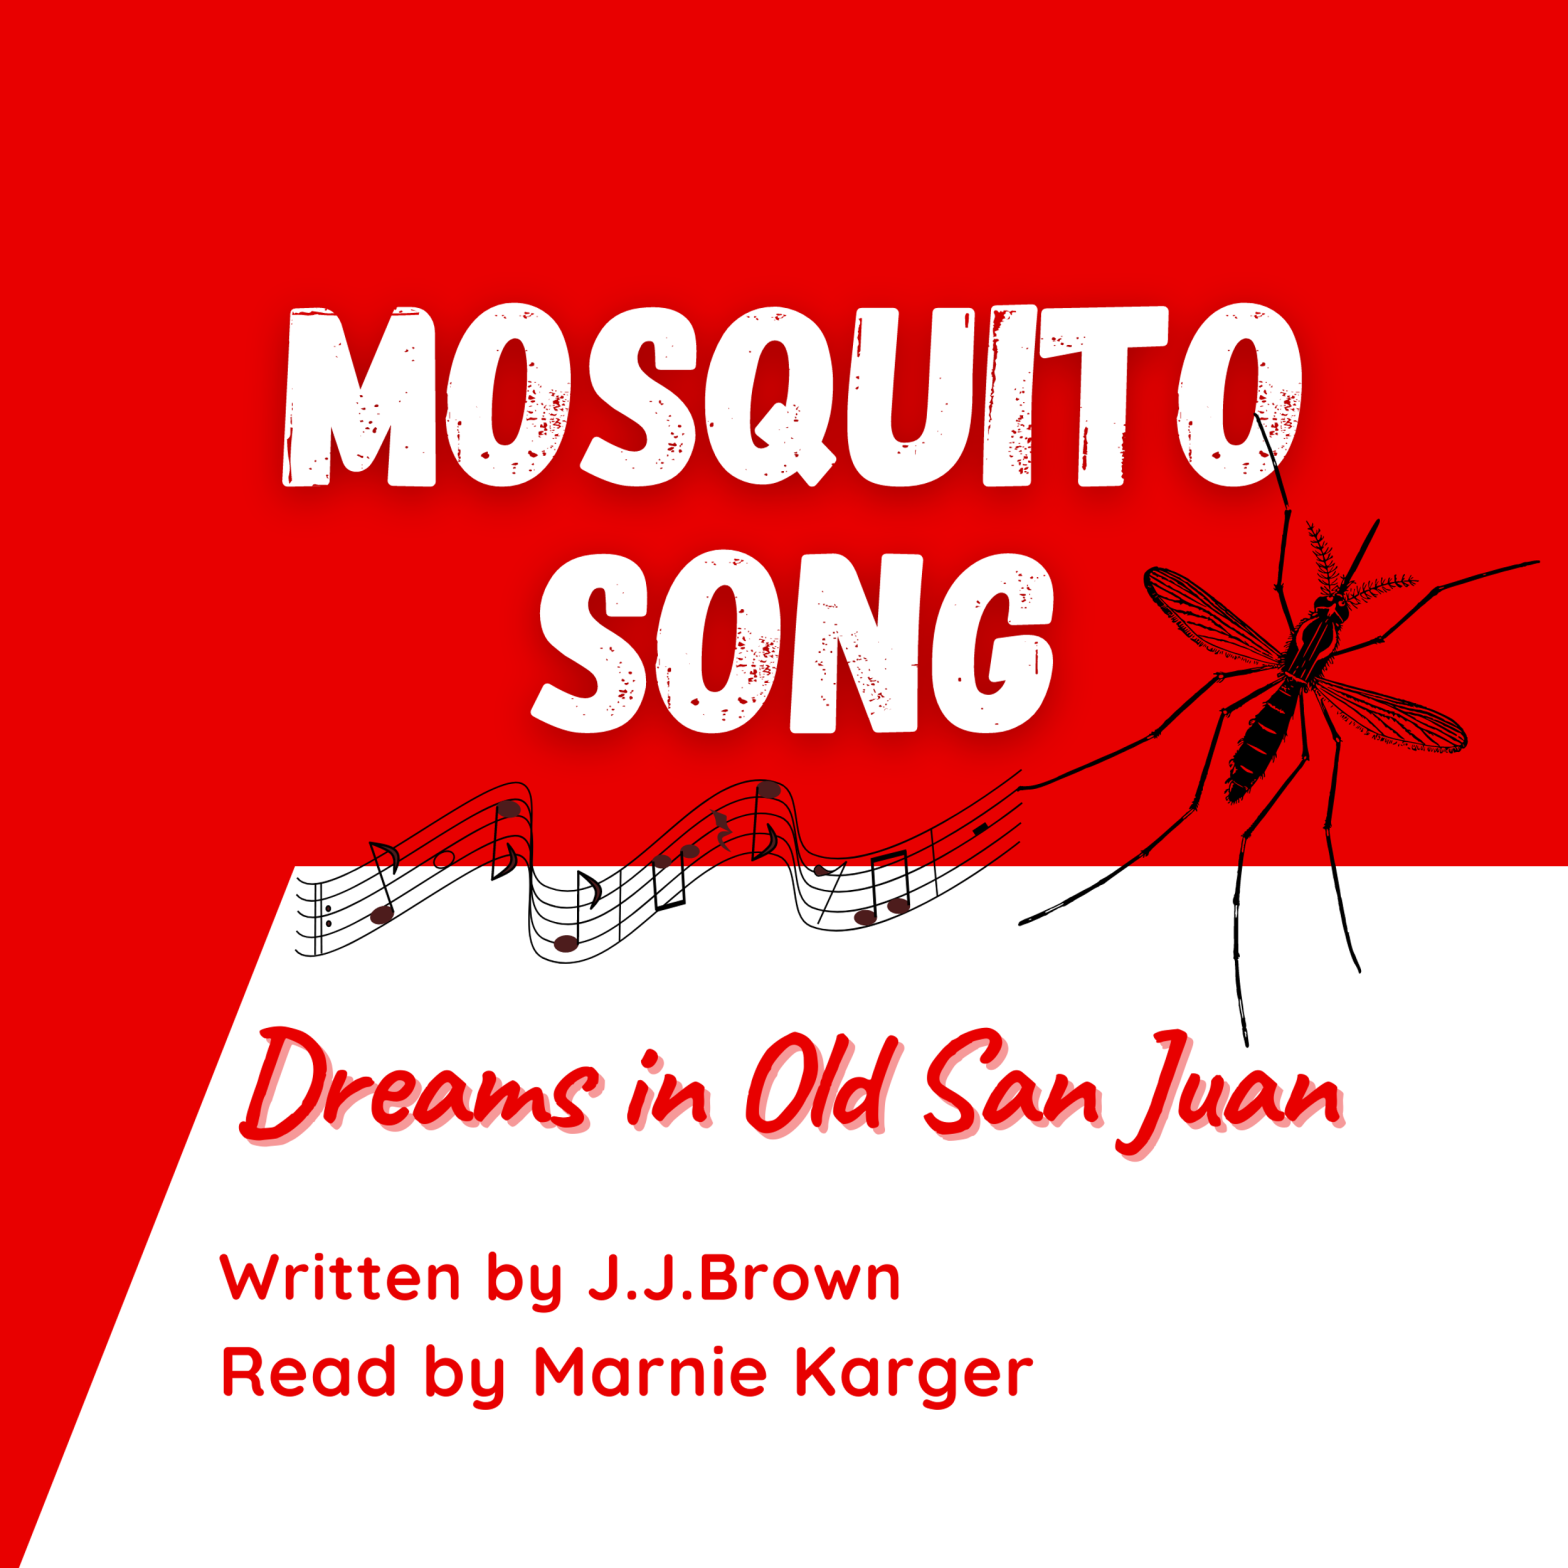 Mosquito Song Dreams in Old San Juan by J.J.Brown